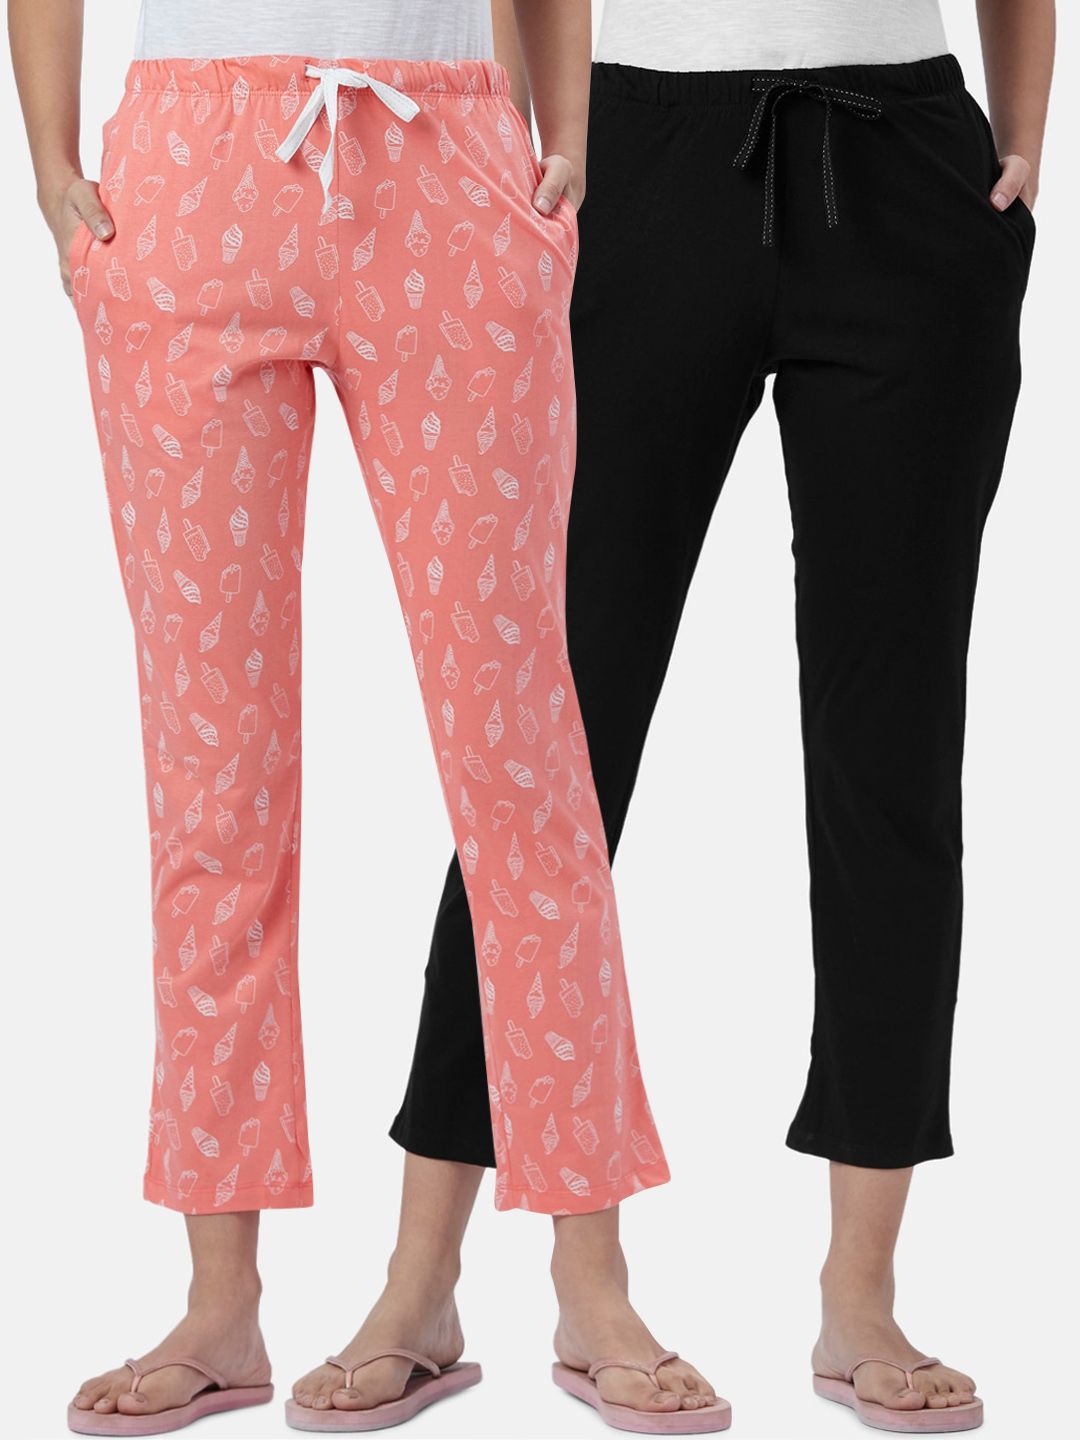 Dreamz by Pantaloons Women Pack of 2 Orange & Black Cotton Lounge Pants Price in India